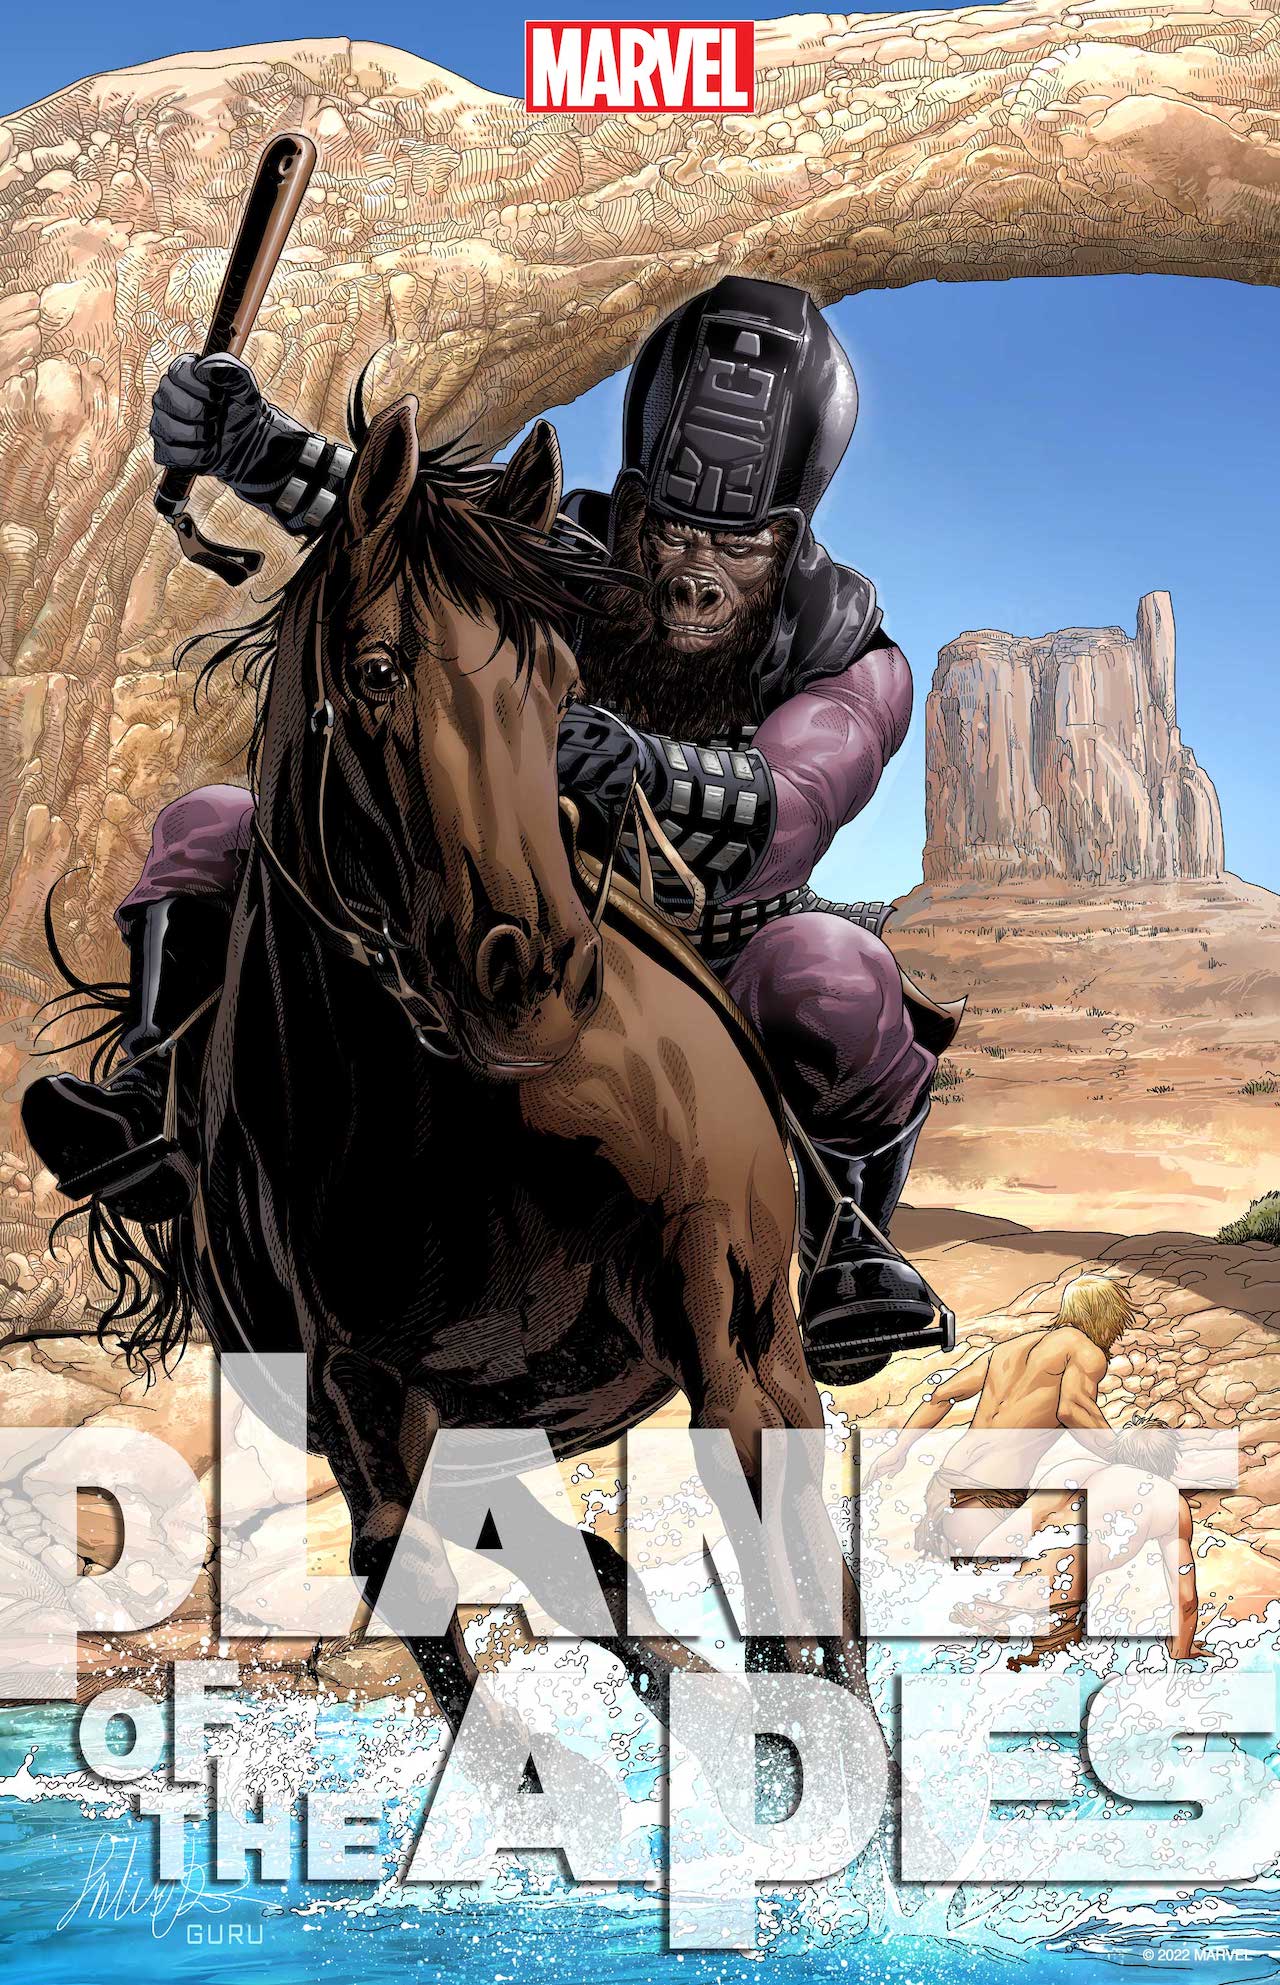 Salvador Larroca Planet of the Apes artwork of ape riding horse past human